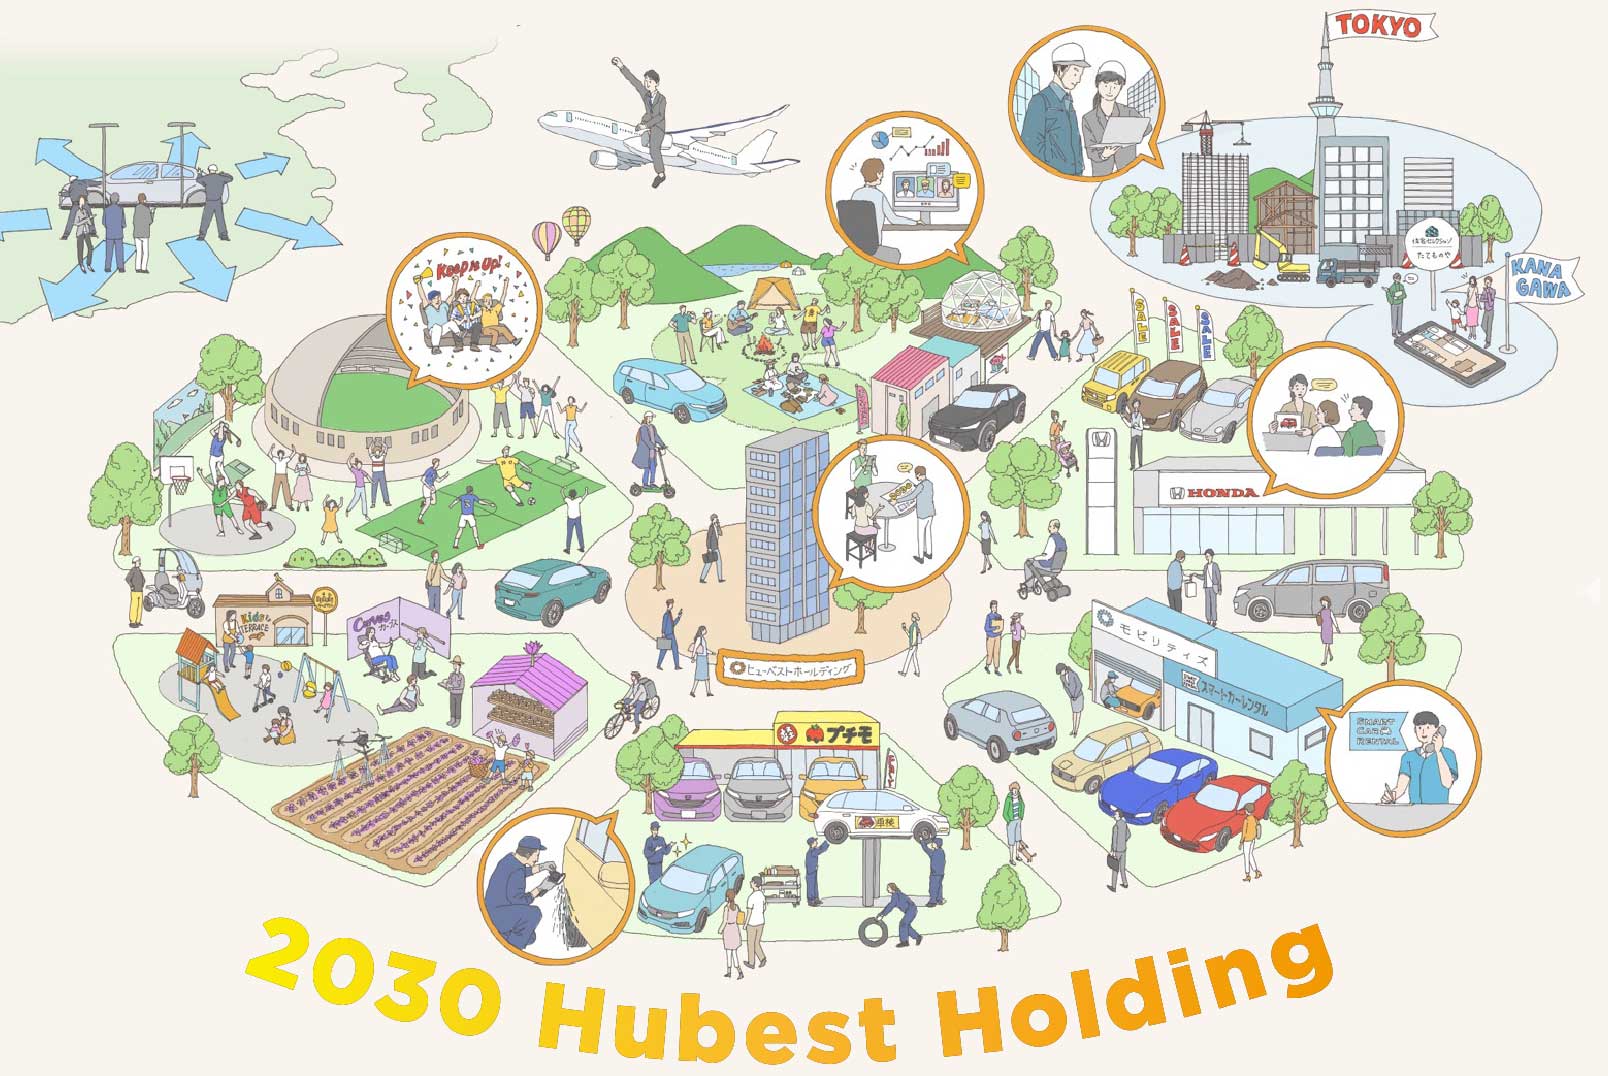 2030 Hubest Holding